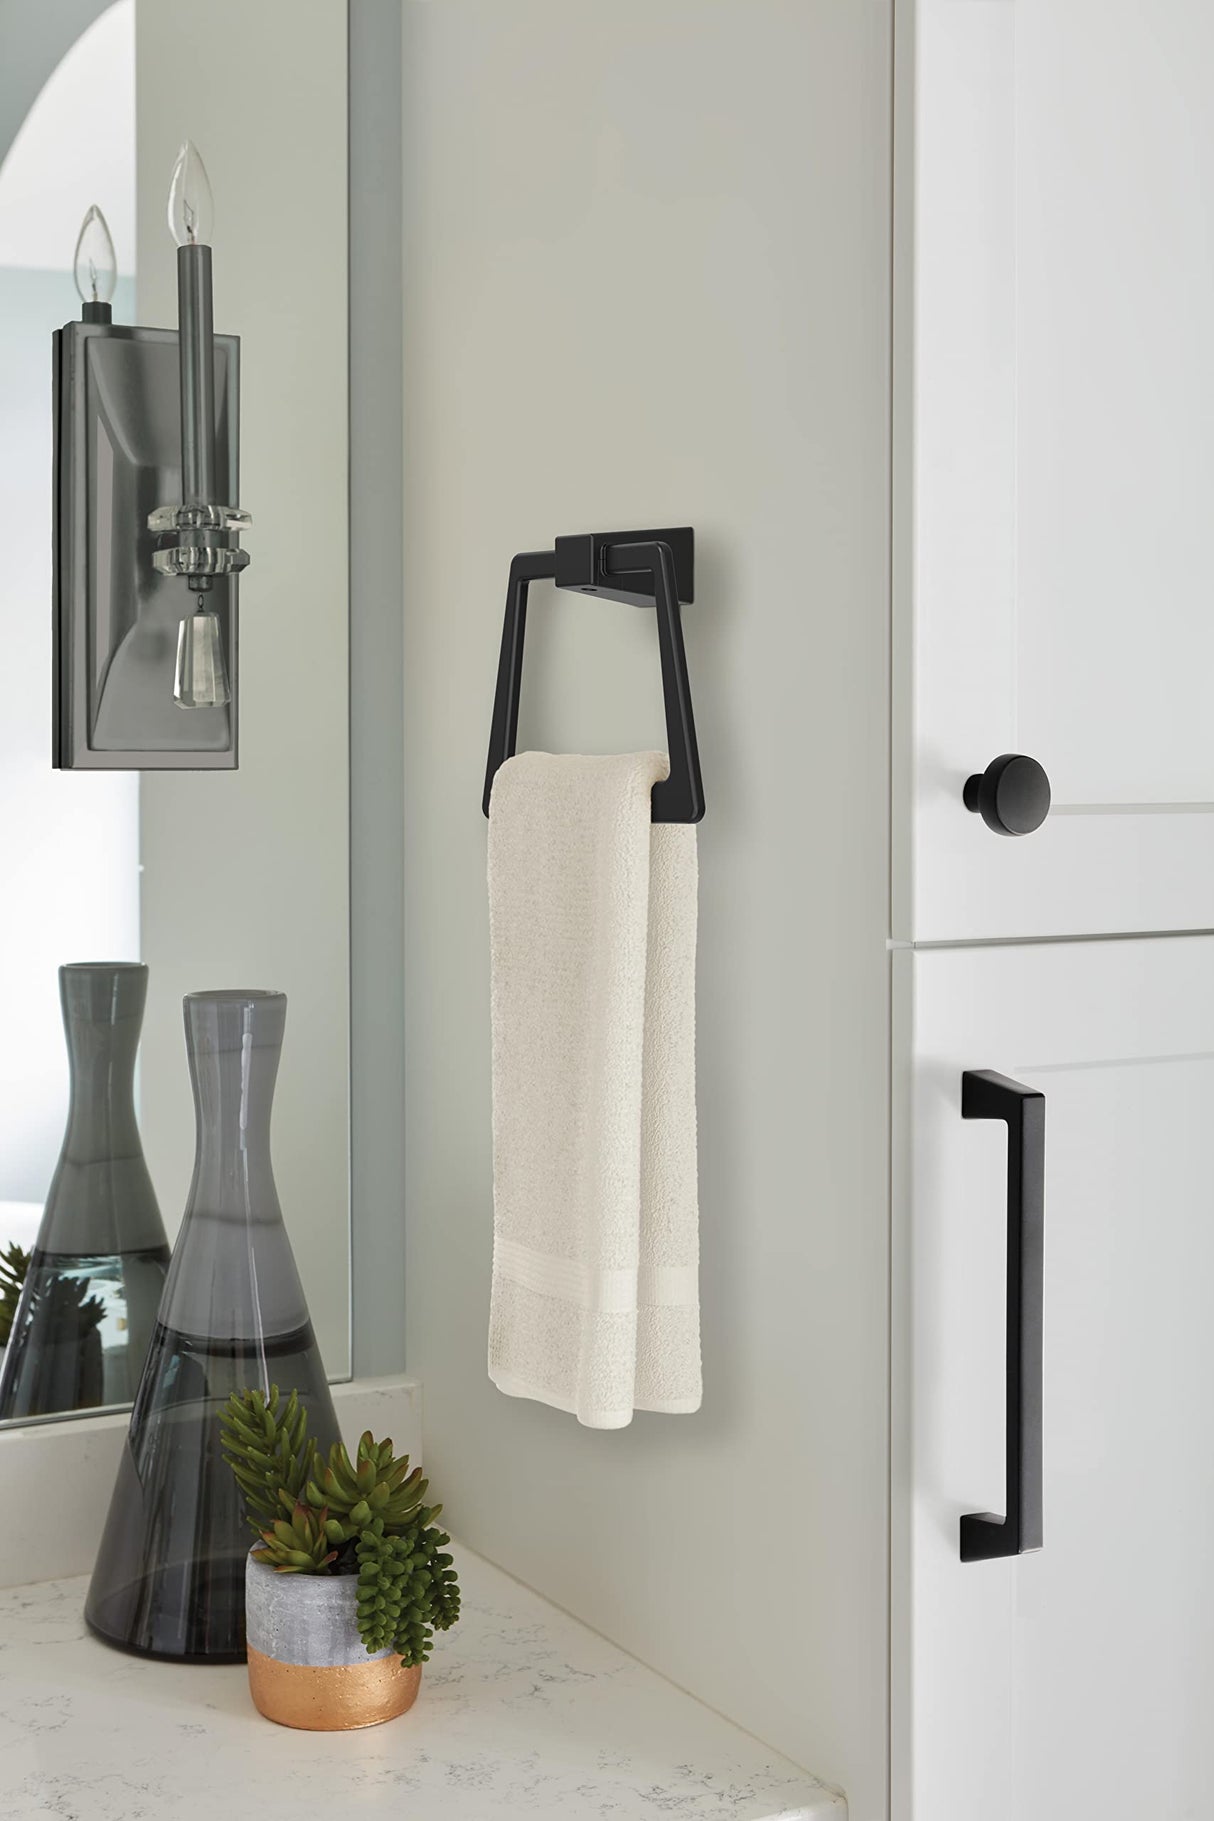 Amerock BH36002MB Matte Black Towel Bar 6-13/16 in (173 mm) Length Towel Holder Blackrock Hand Towel Holder for Bathroom Wall Small Kitchen Towel Holder Bath Accessories